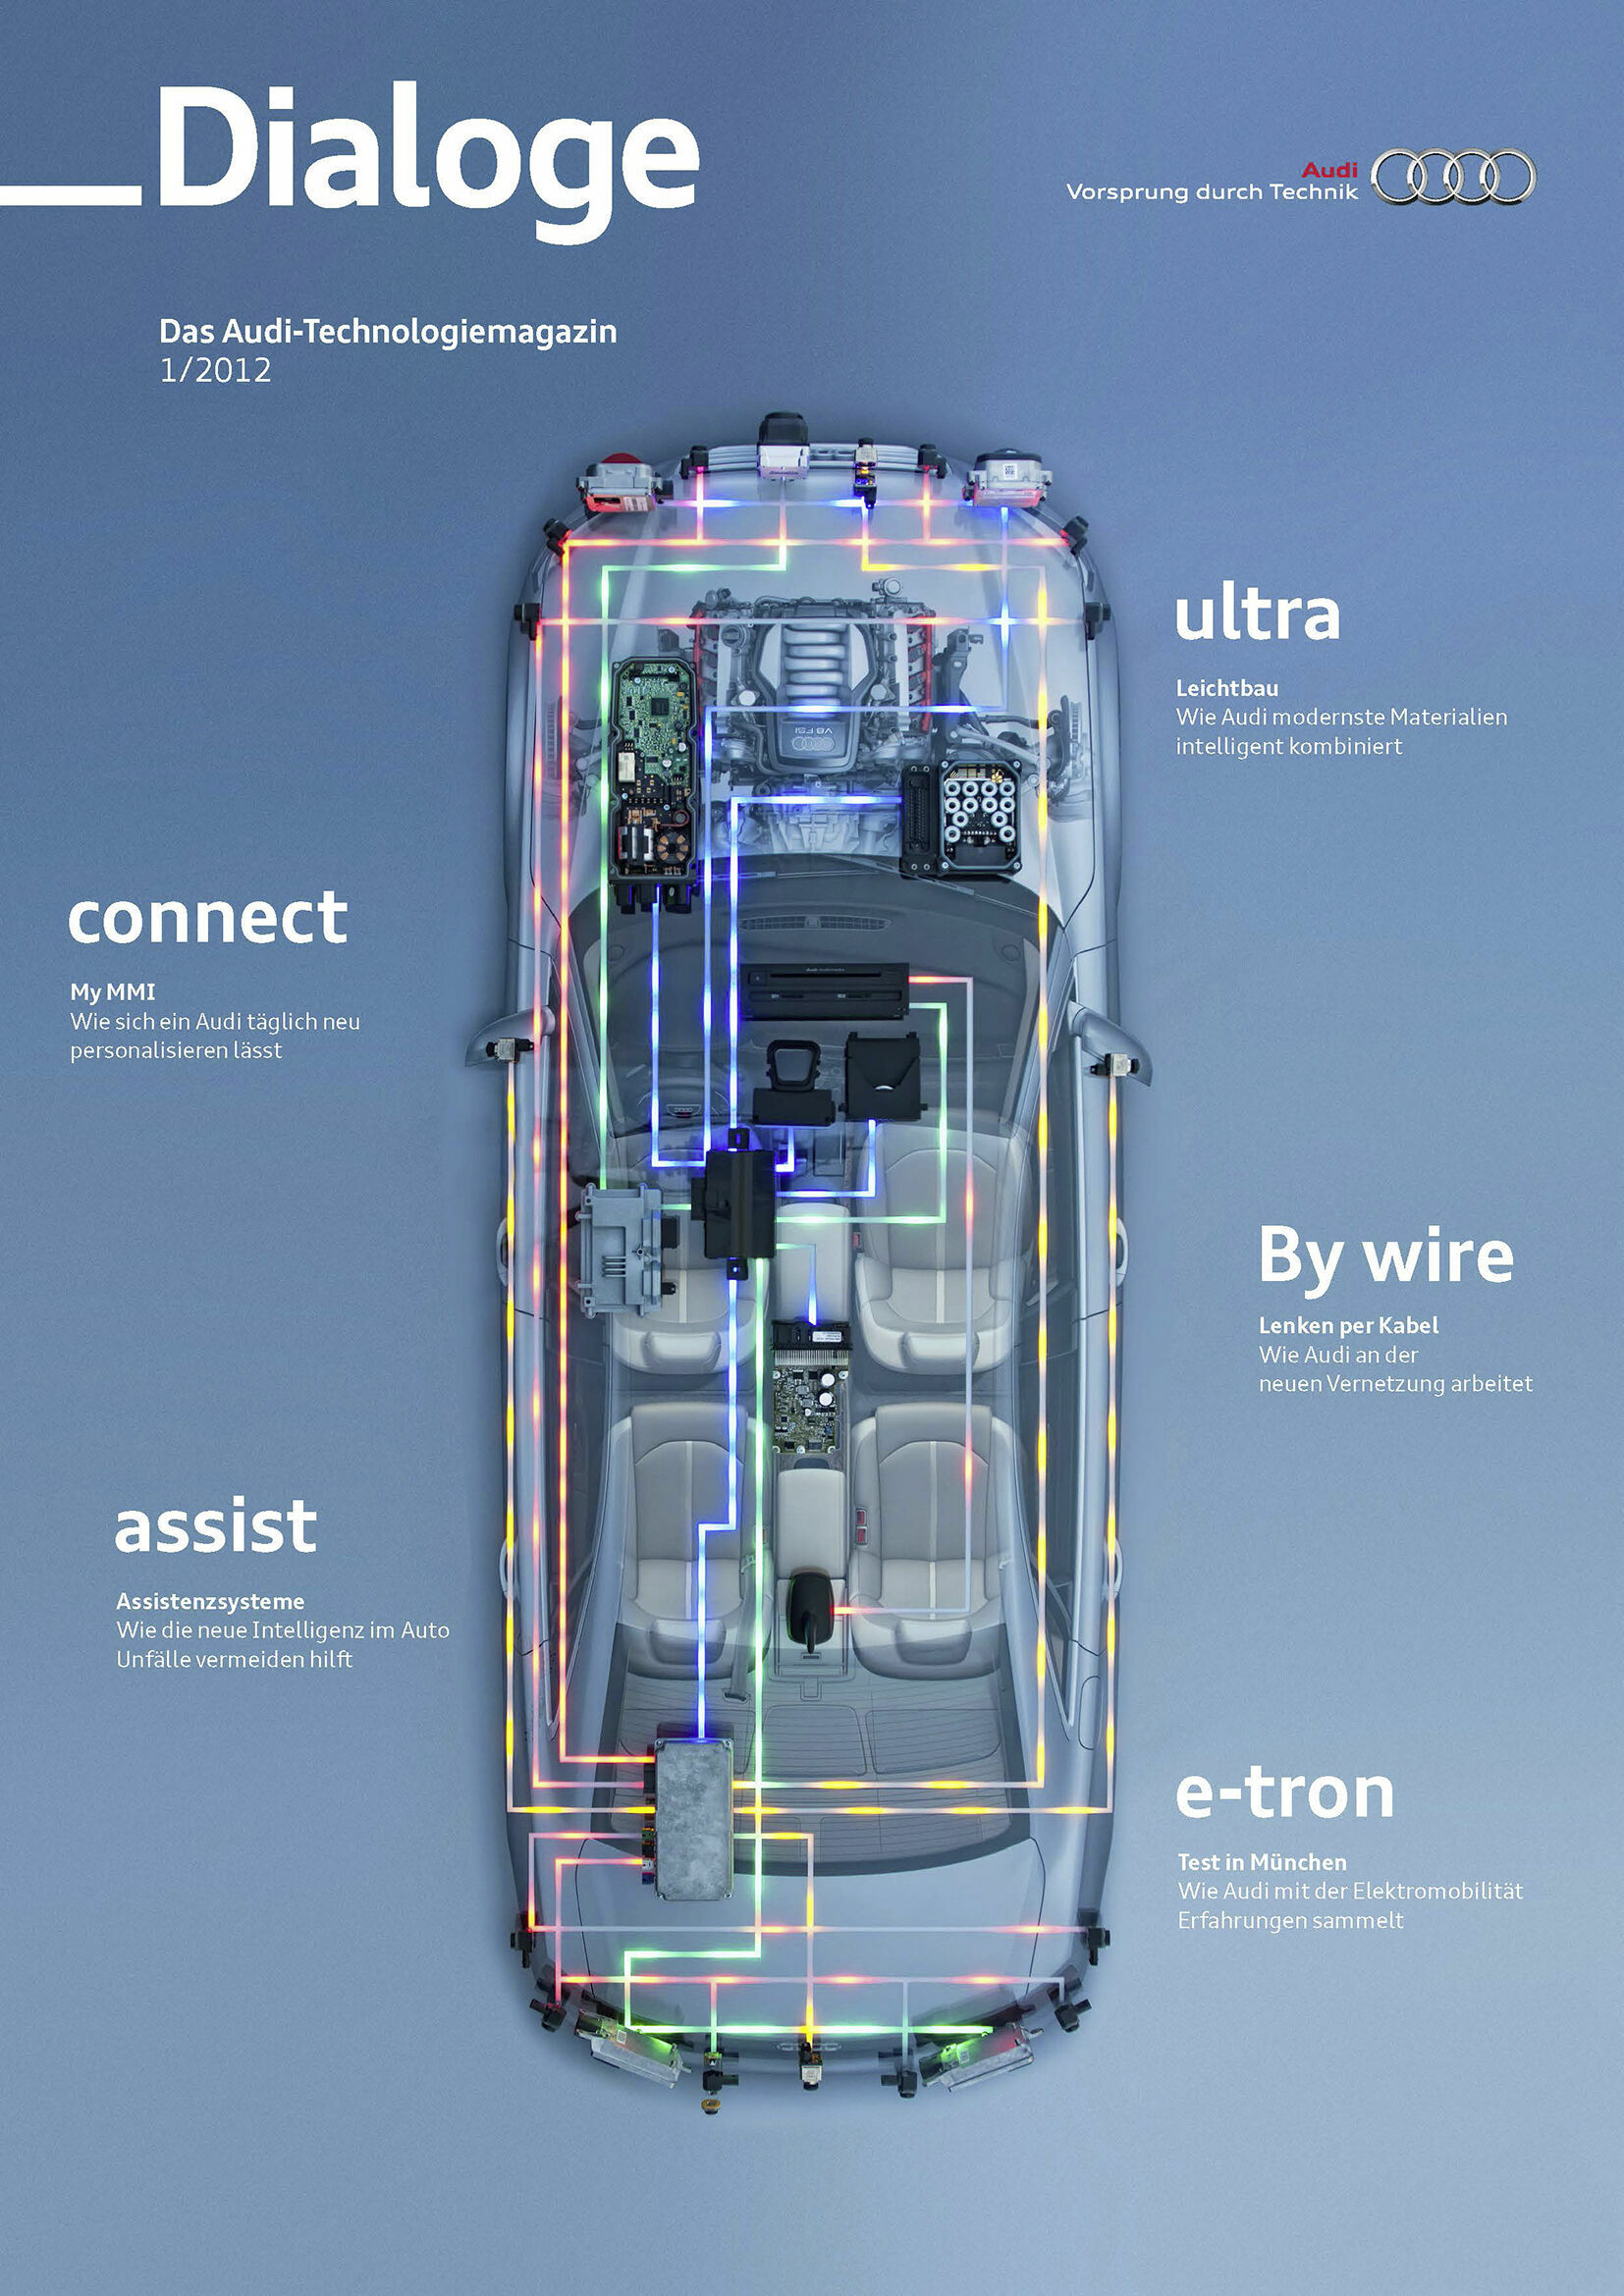 Dialoge - Das Audi-Technologiemagazin 1/2012